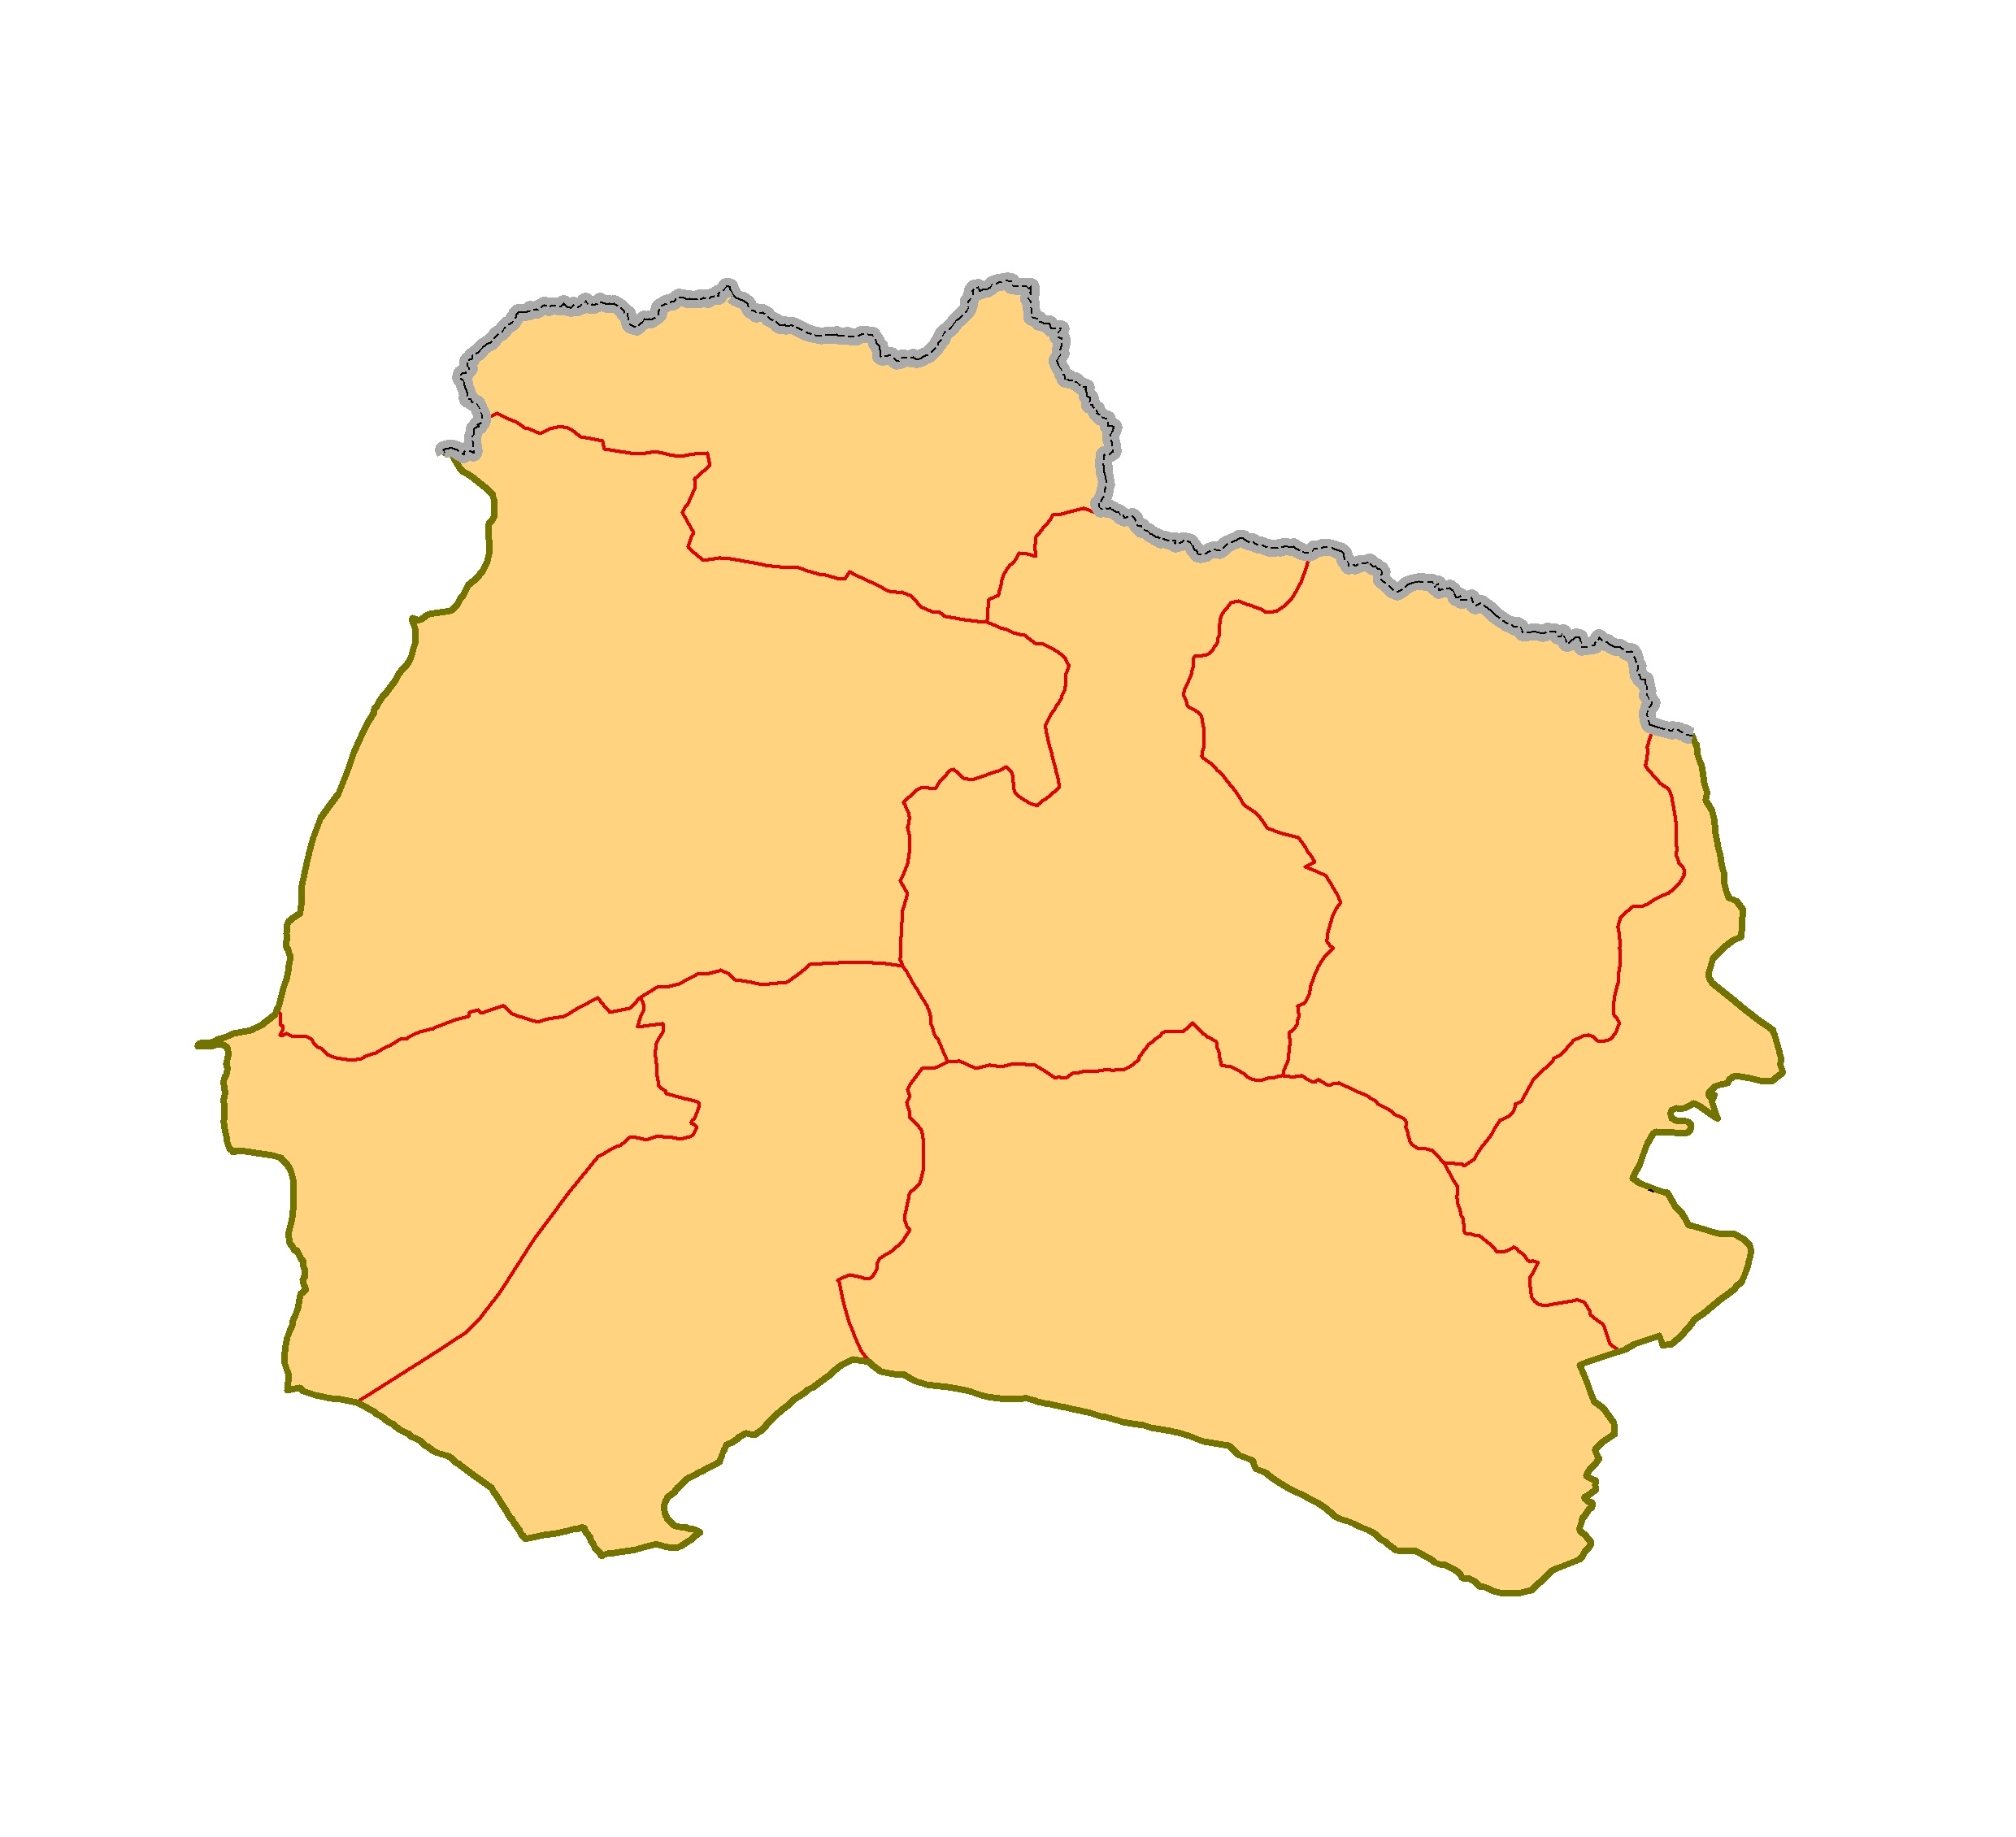 North Khorasan